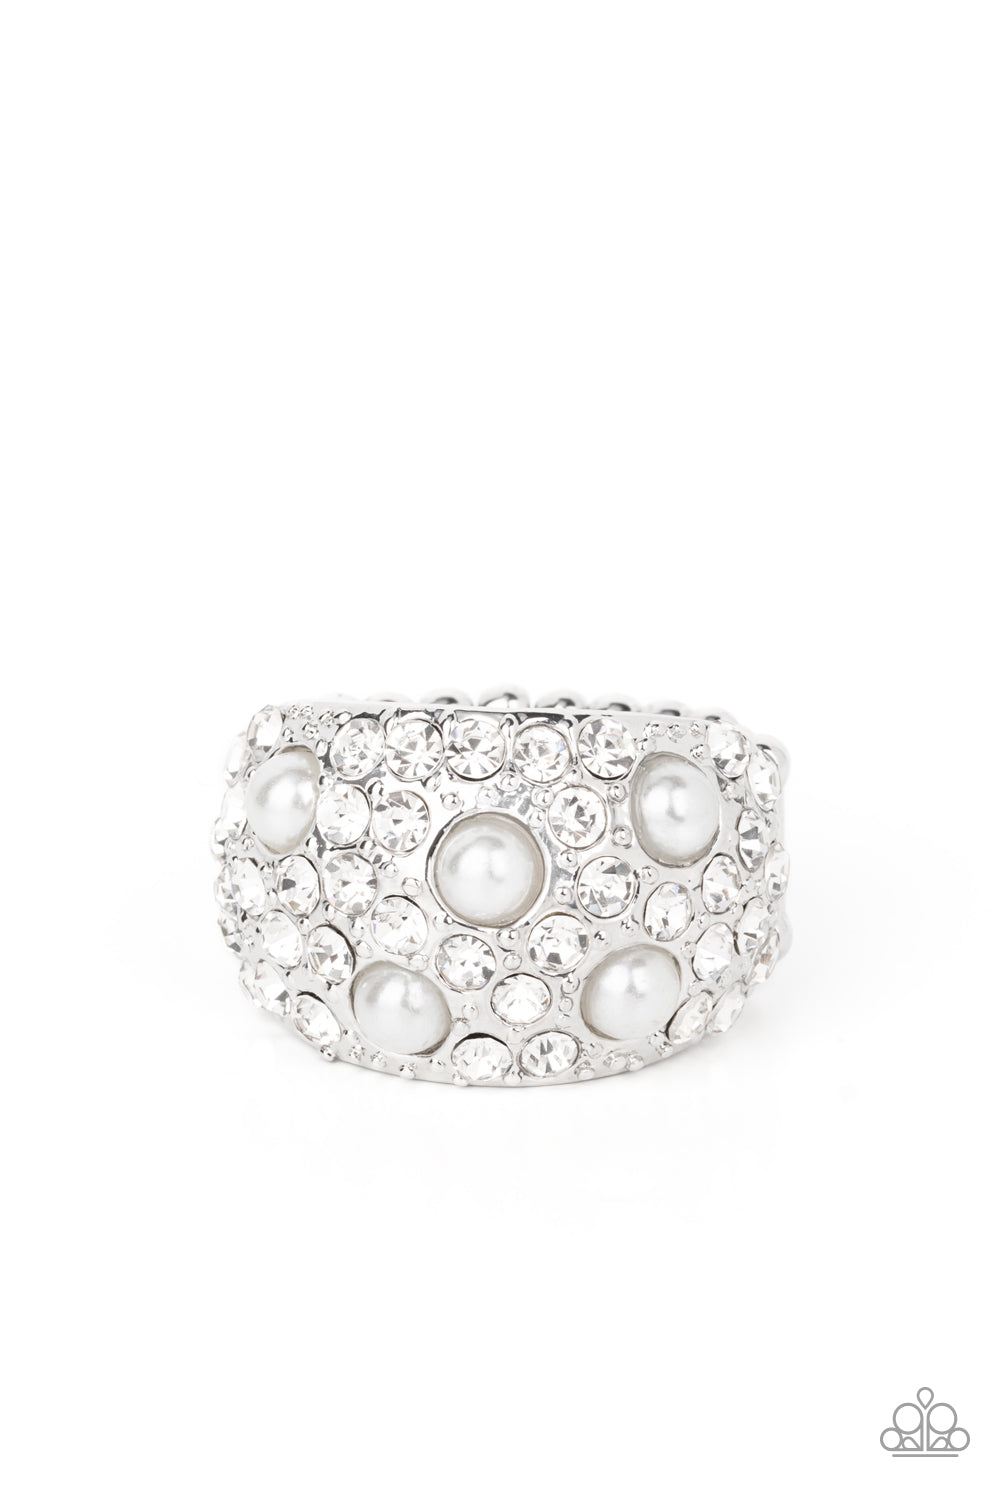 Gatsby's Girl - white - Paparazzi ring